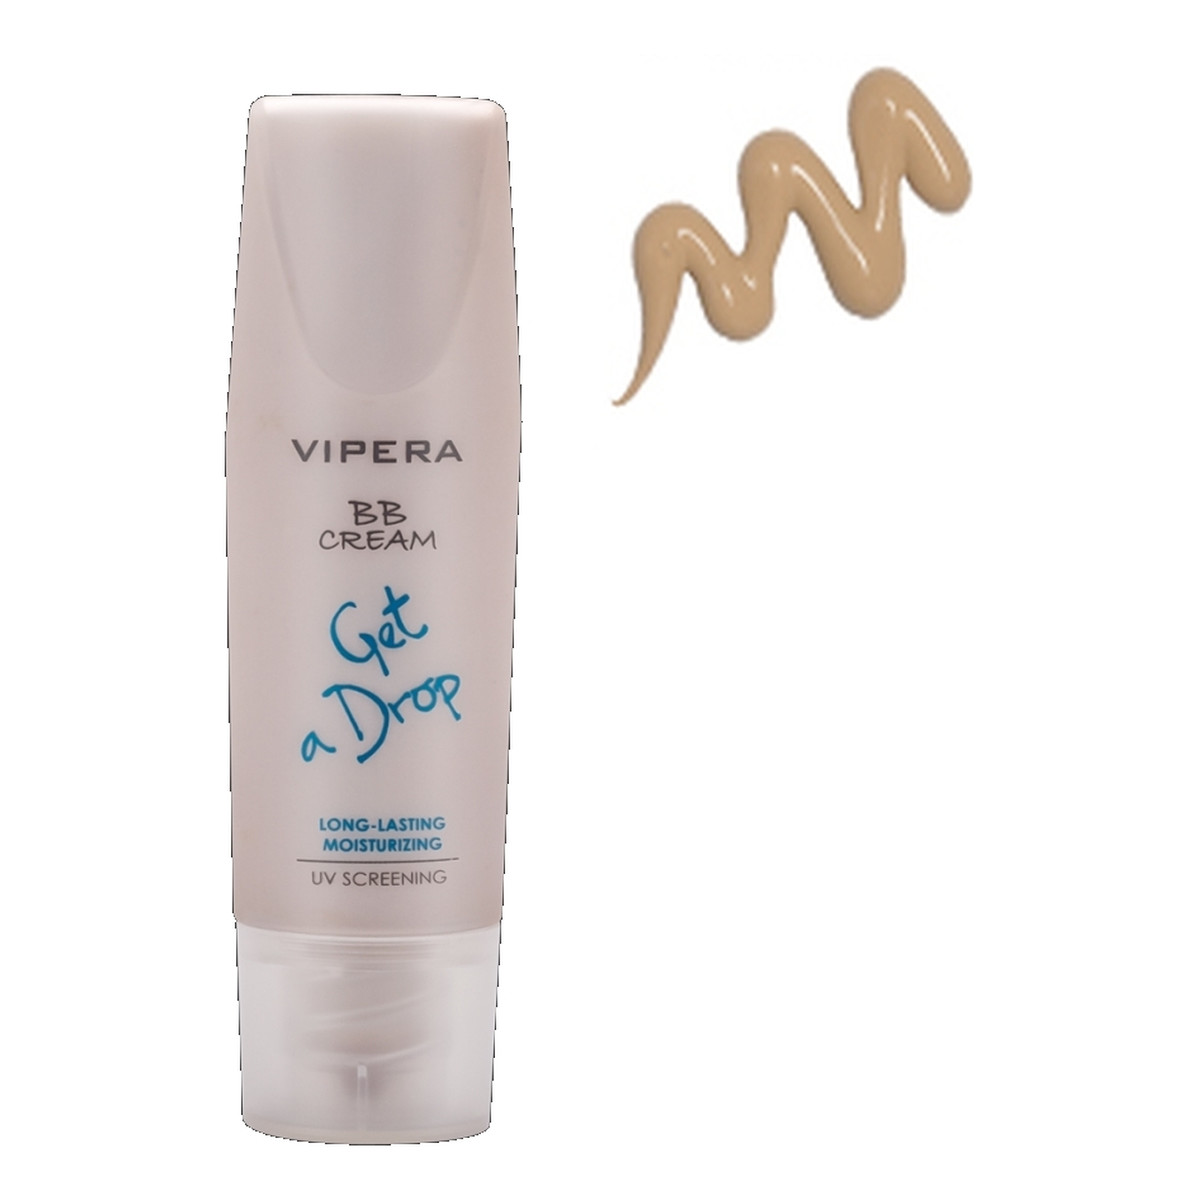 Vipera Get A Drop nawilżający krem BB z filtrem UV 35ml